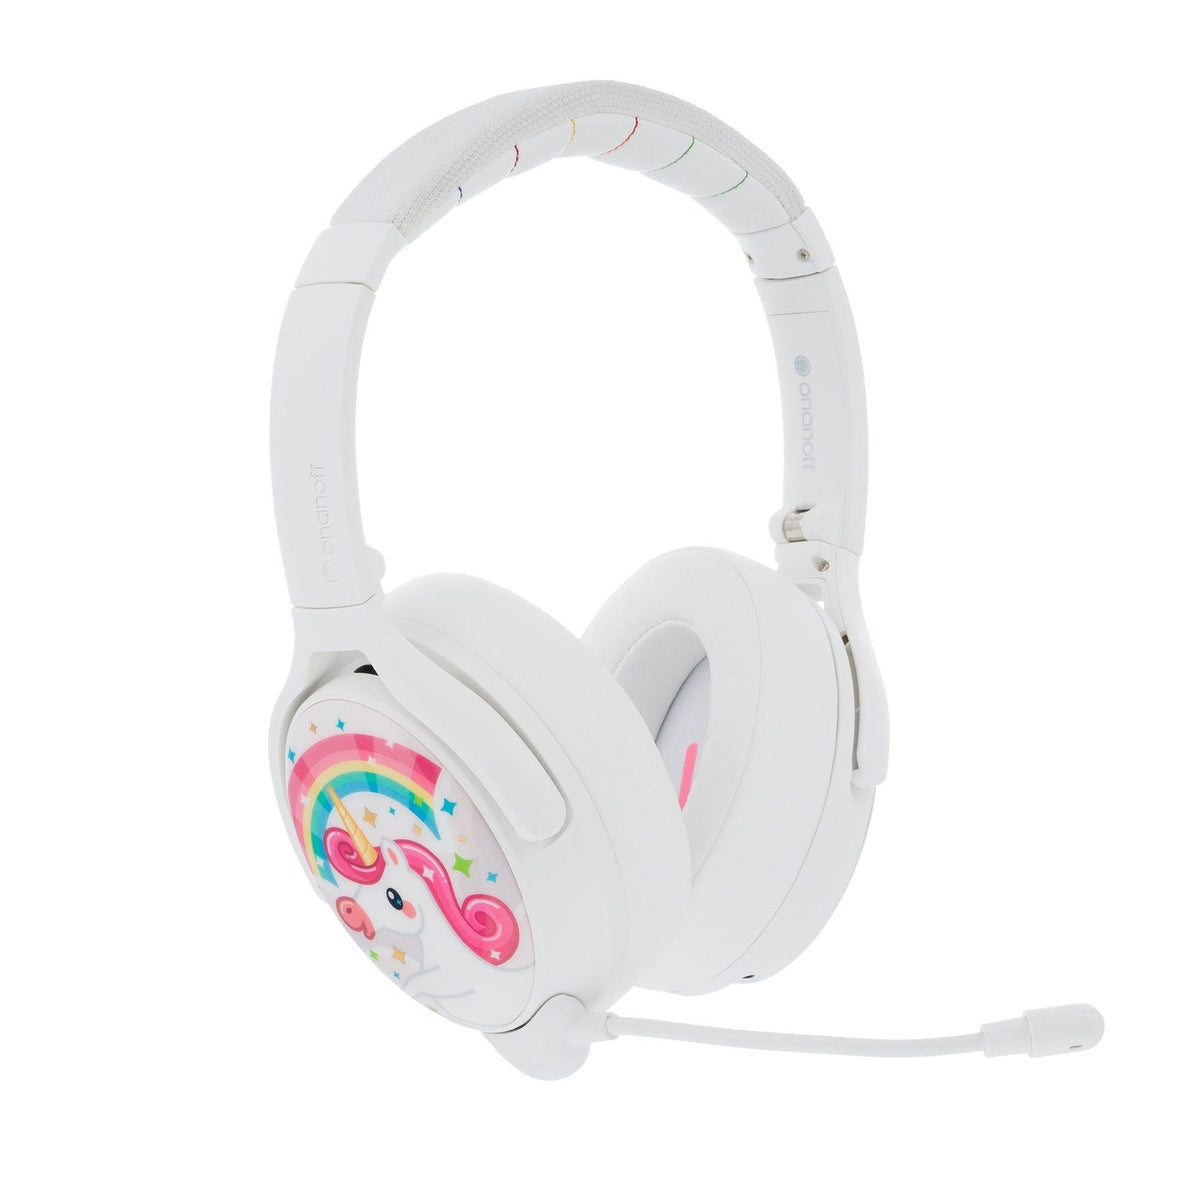 [OPEN BOX] BUDDYPHONES Cosmos Plus Active Noise Cancellation Bluetooth Headphones - Snow White